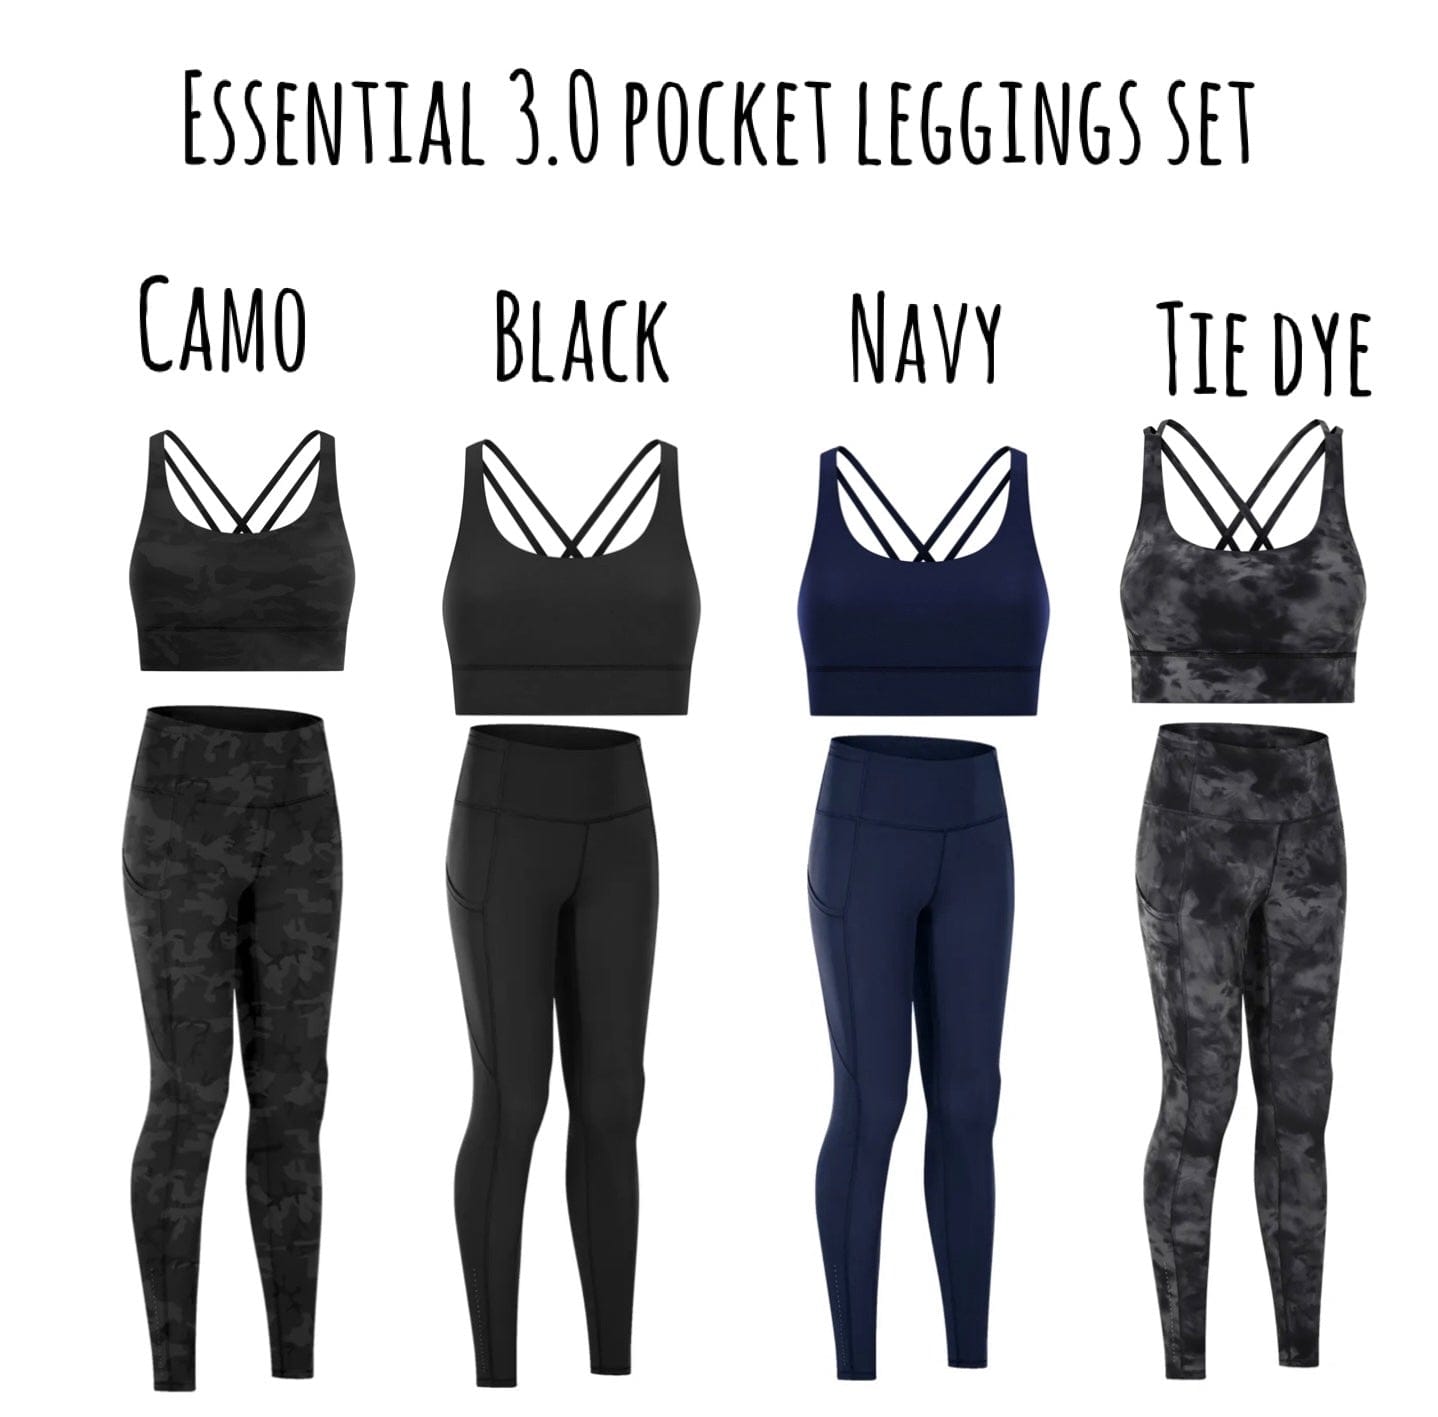 Essential pocket leggings set